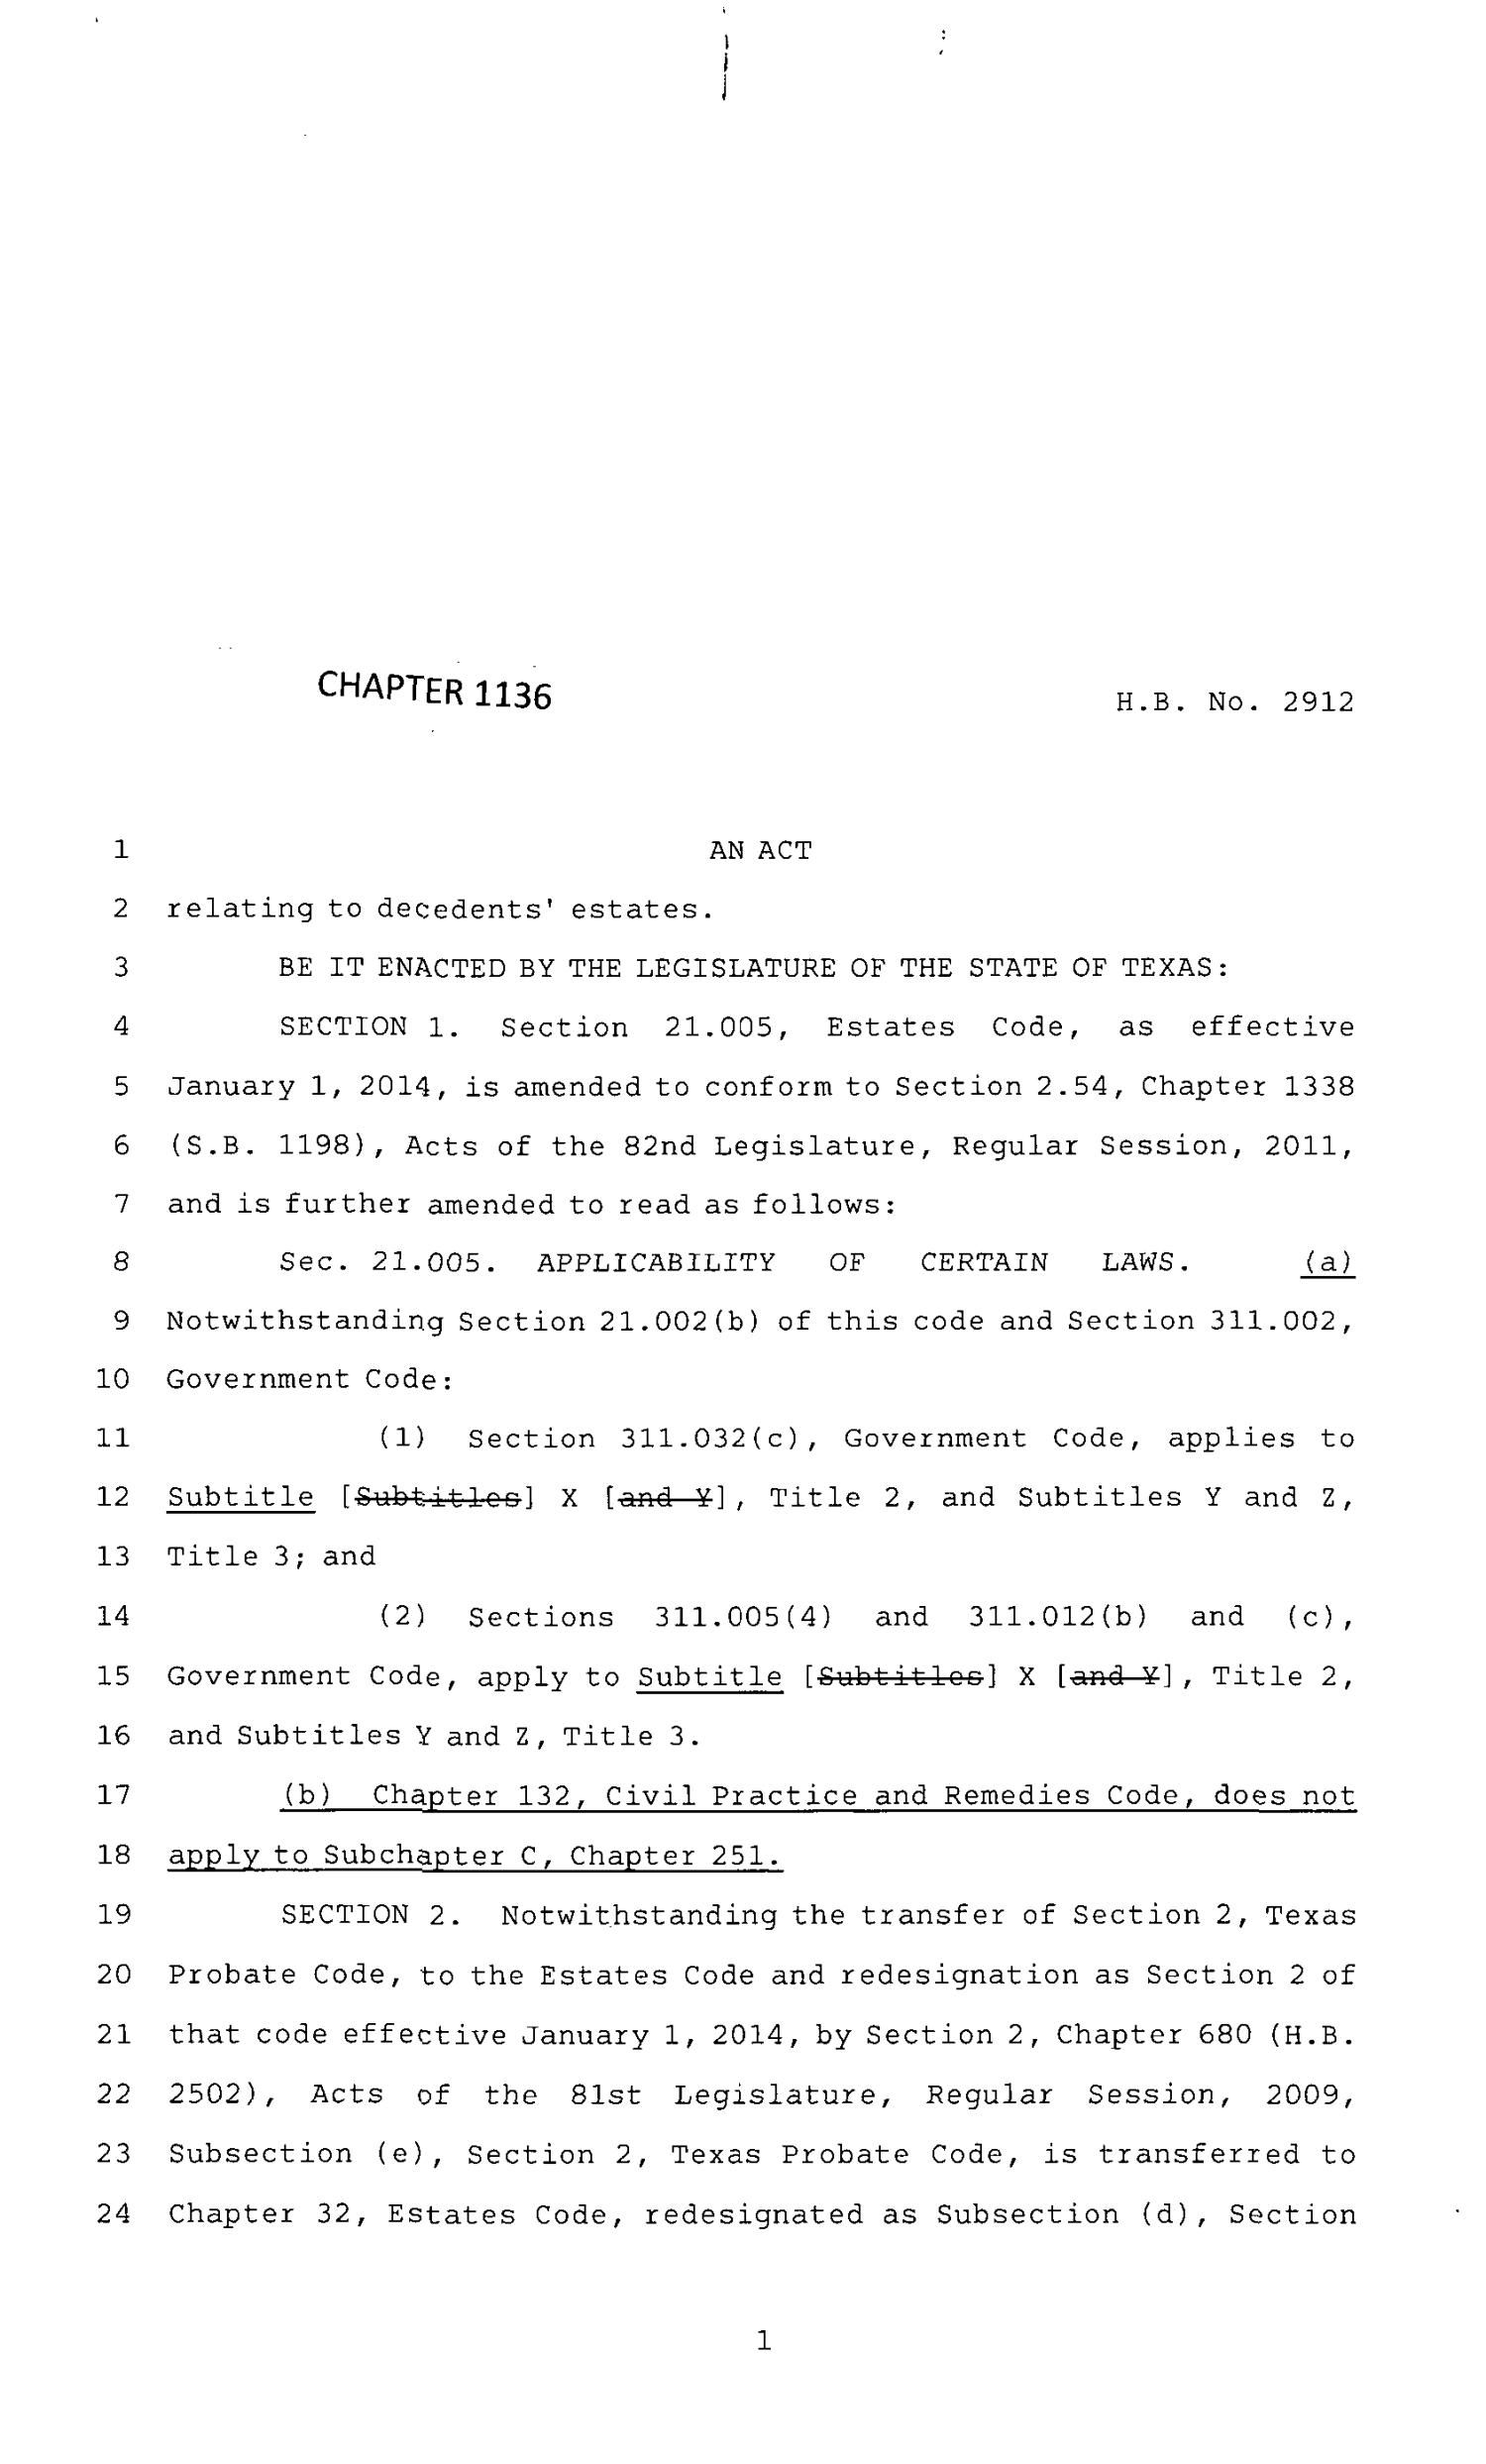 83rd Texas Legislature, Regular Session, House Bill 2912, Chapter 1136